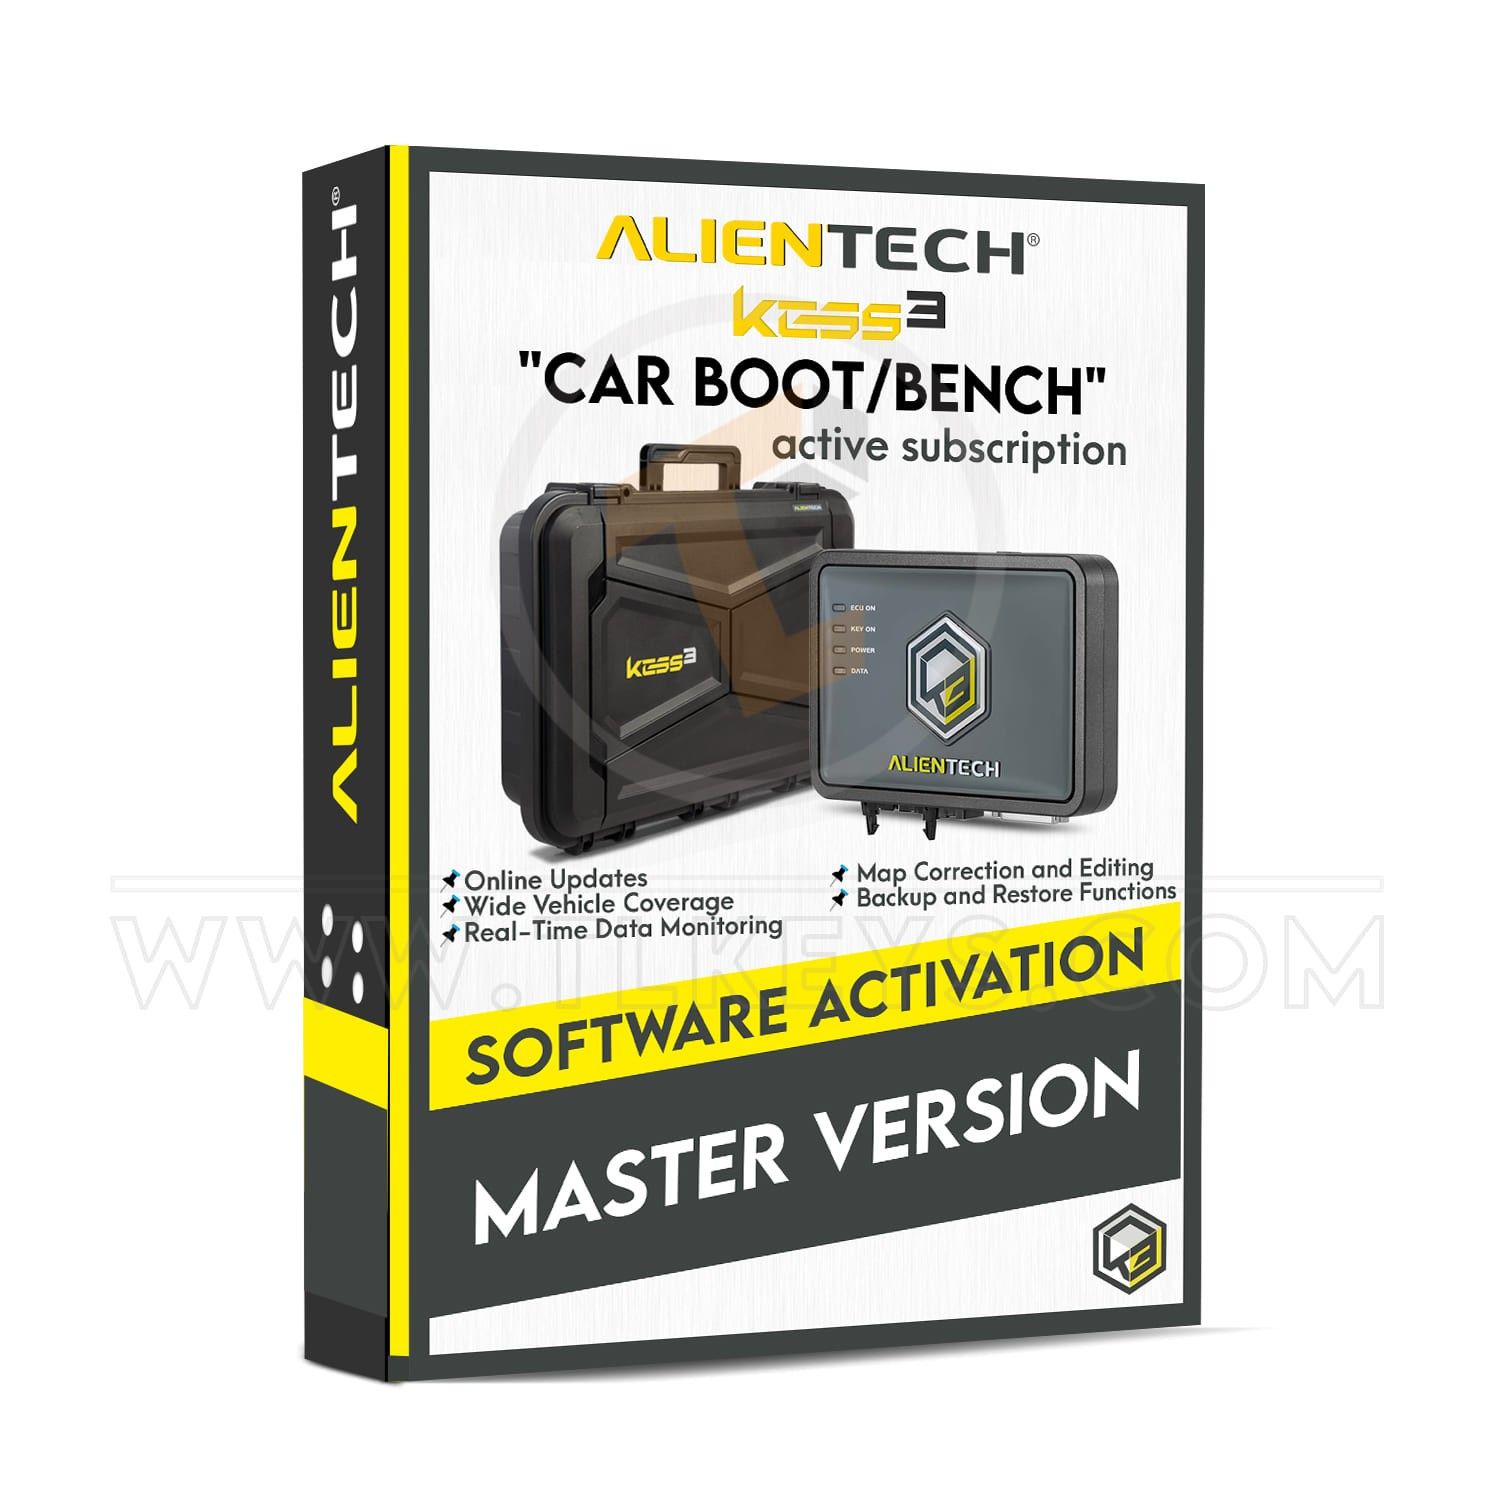 Alientech Master version CAR BOOT/BENCH active sub software